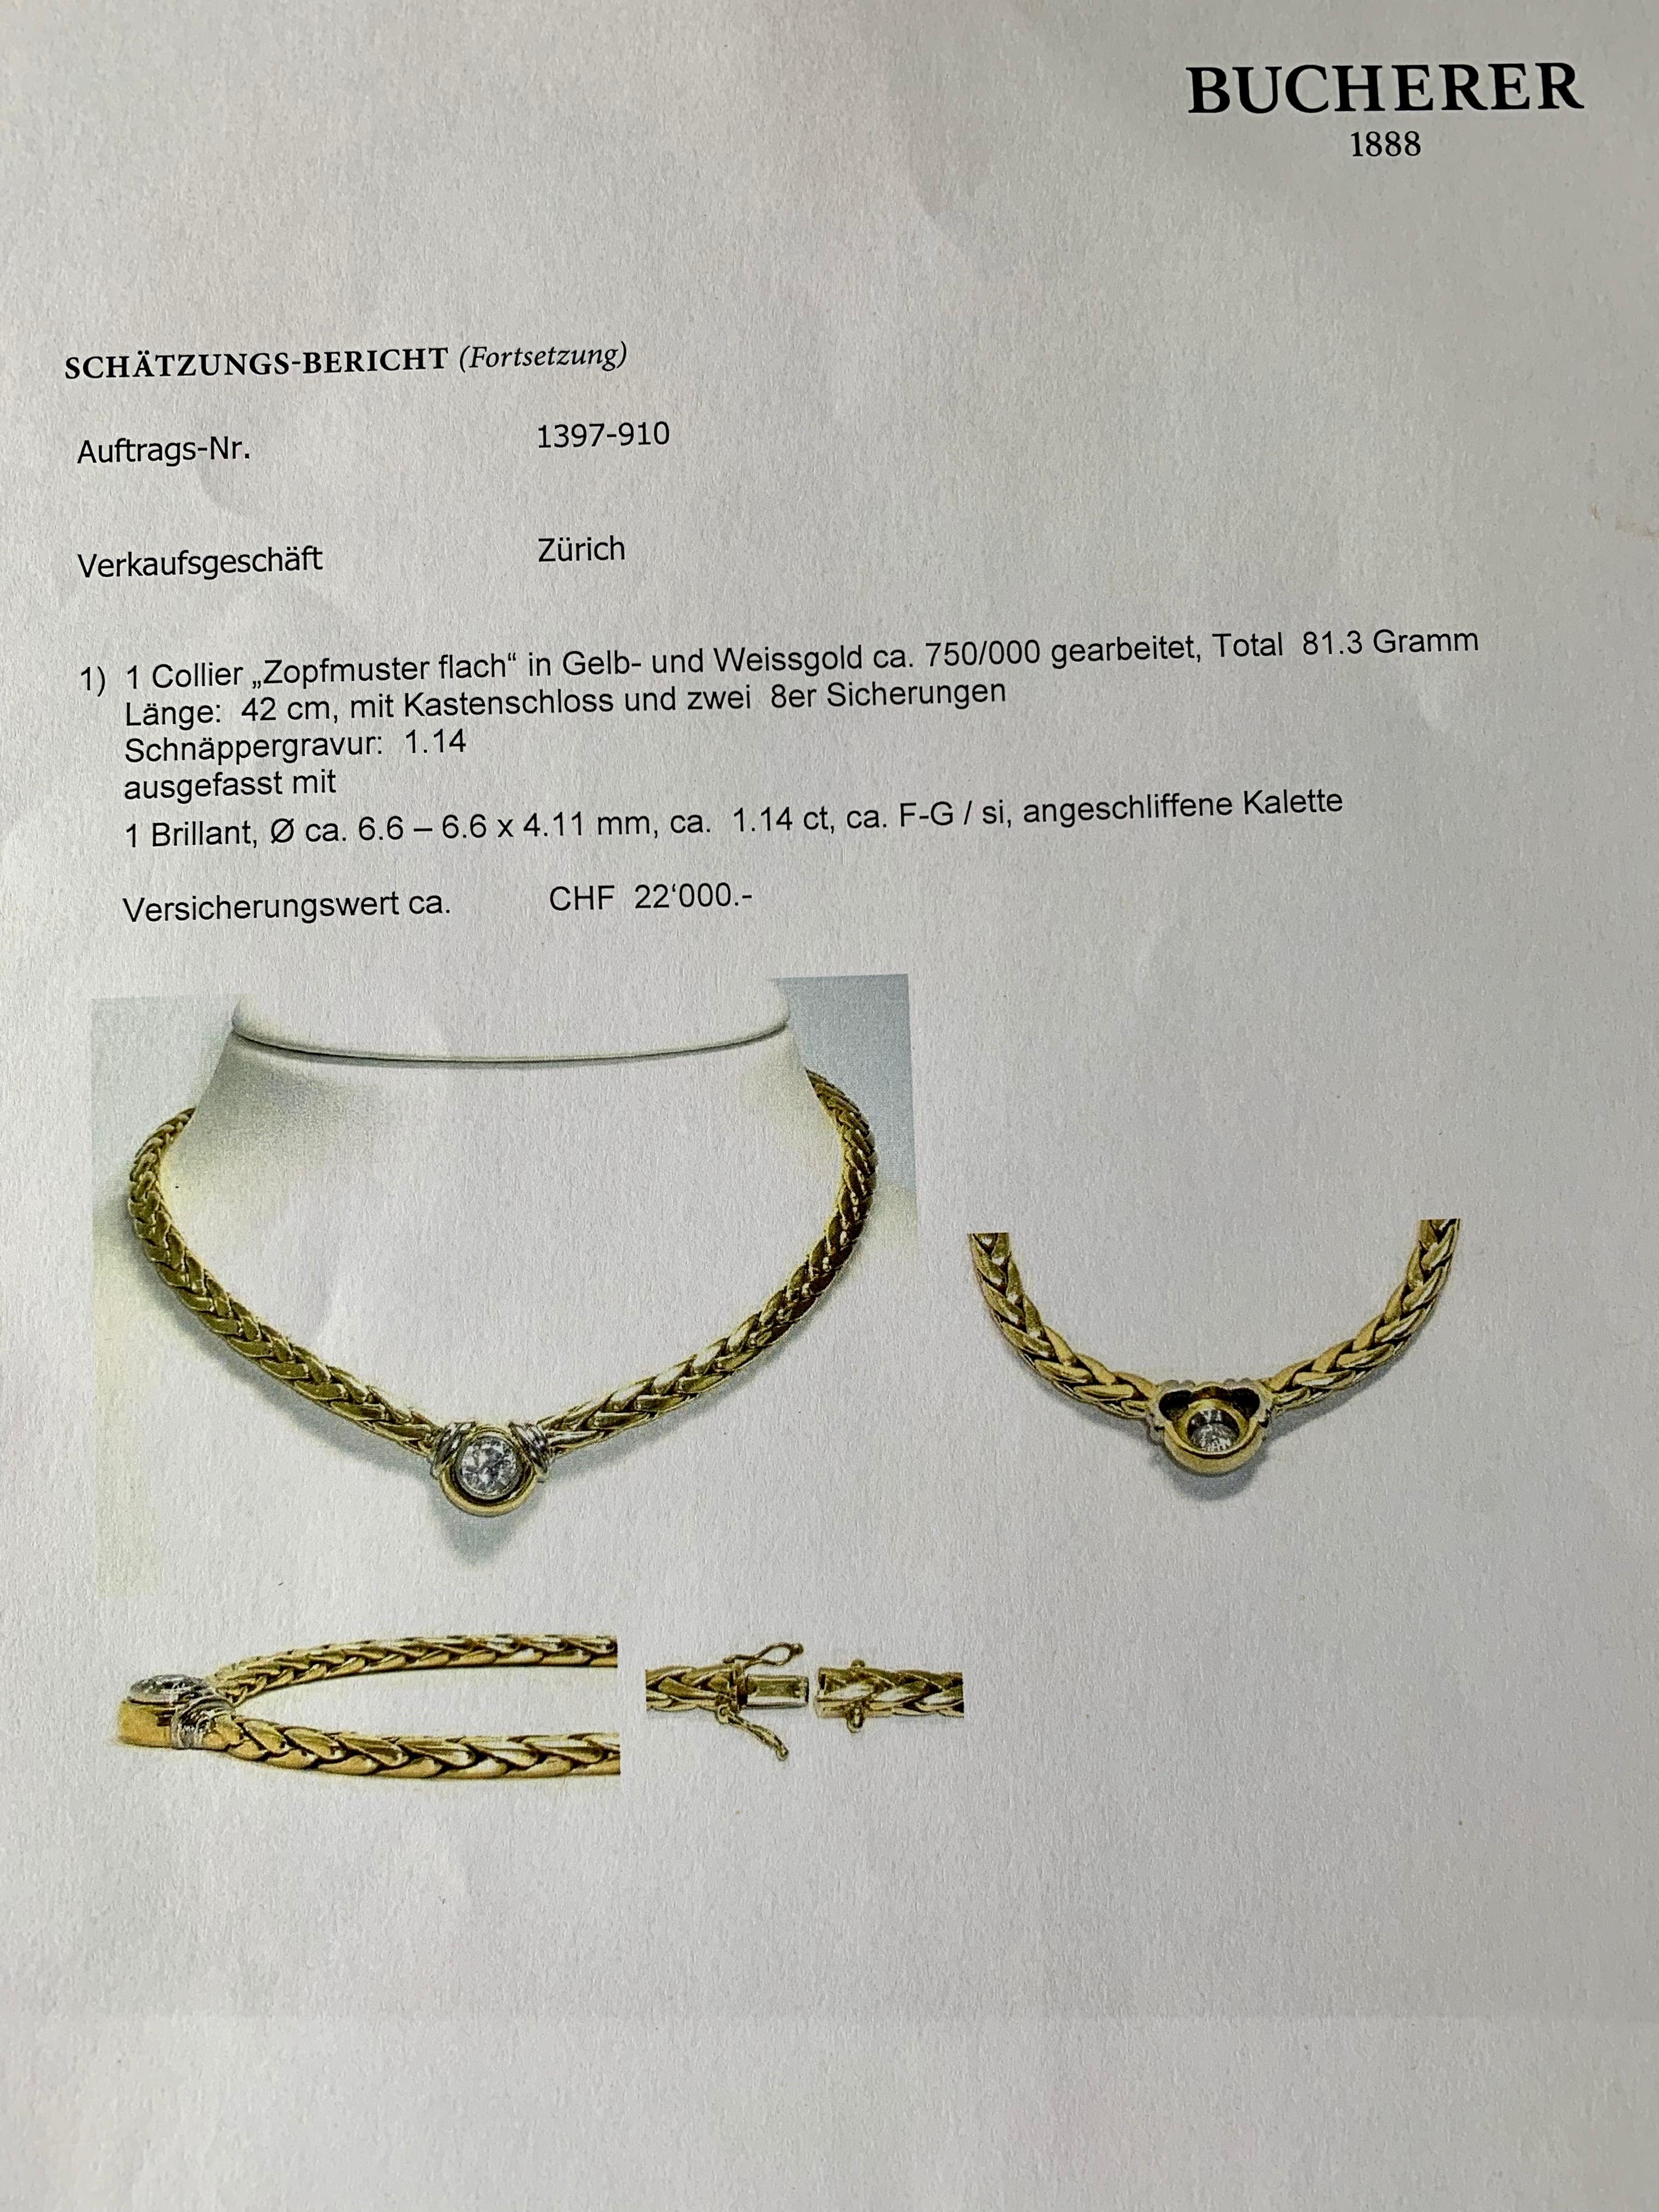 Round Cut Diamond and Gold Necklace, Bucherer